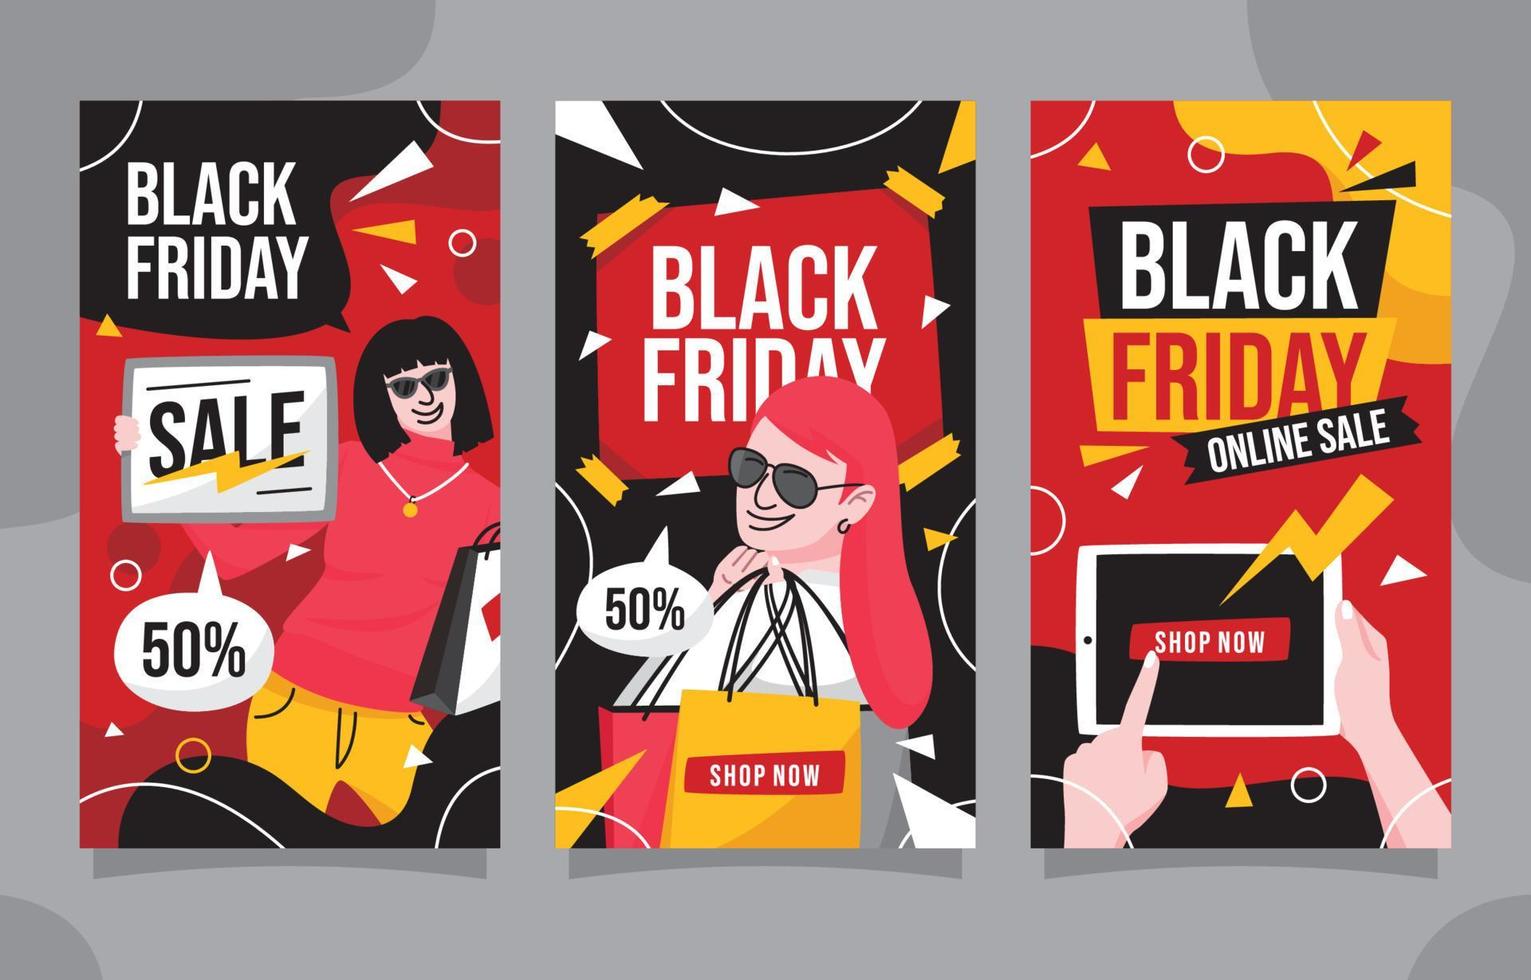 Black Friday Sale Social Media Template vector